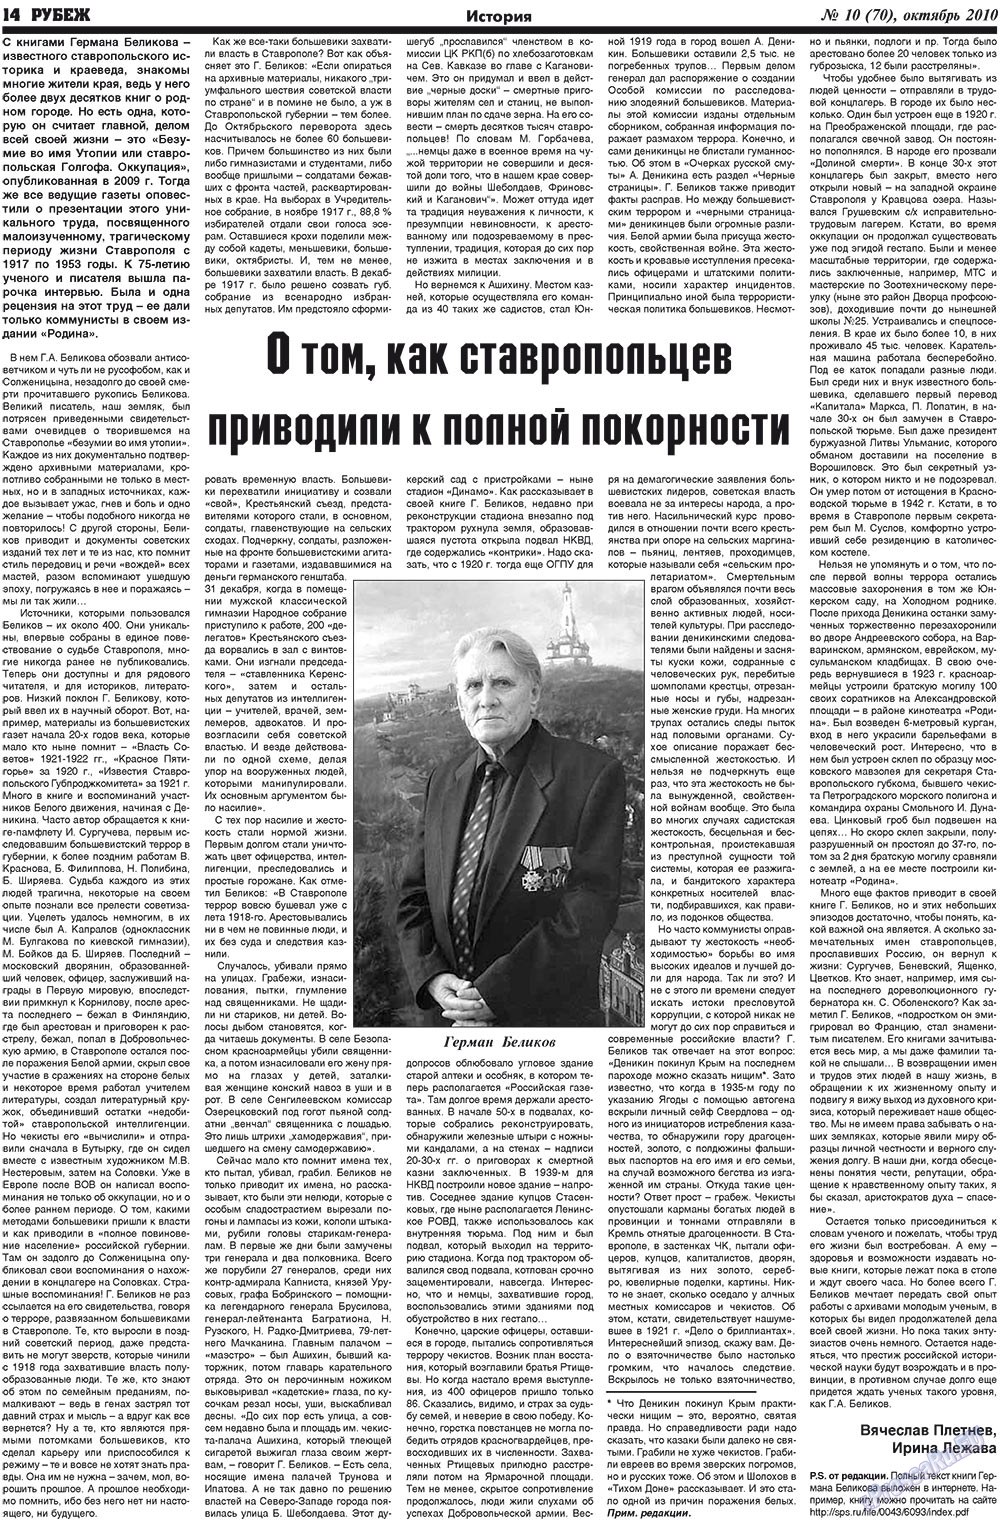 Рубеж, газета. 2010 №10 стр.14